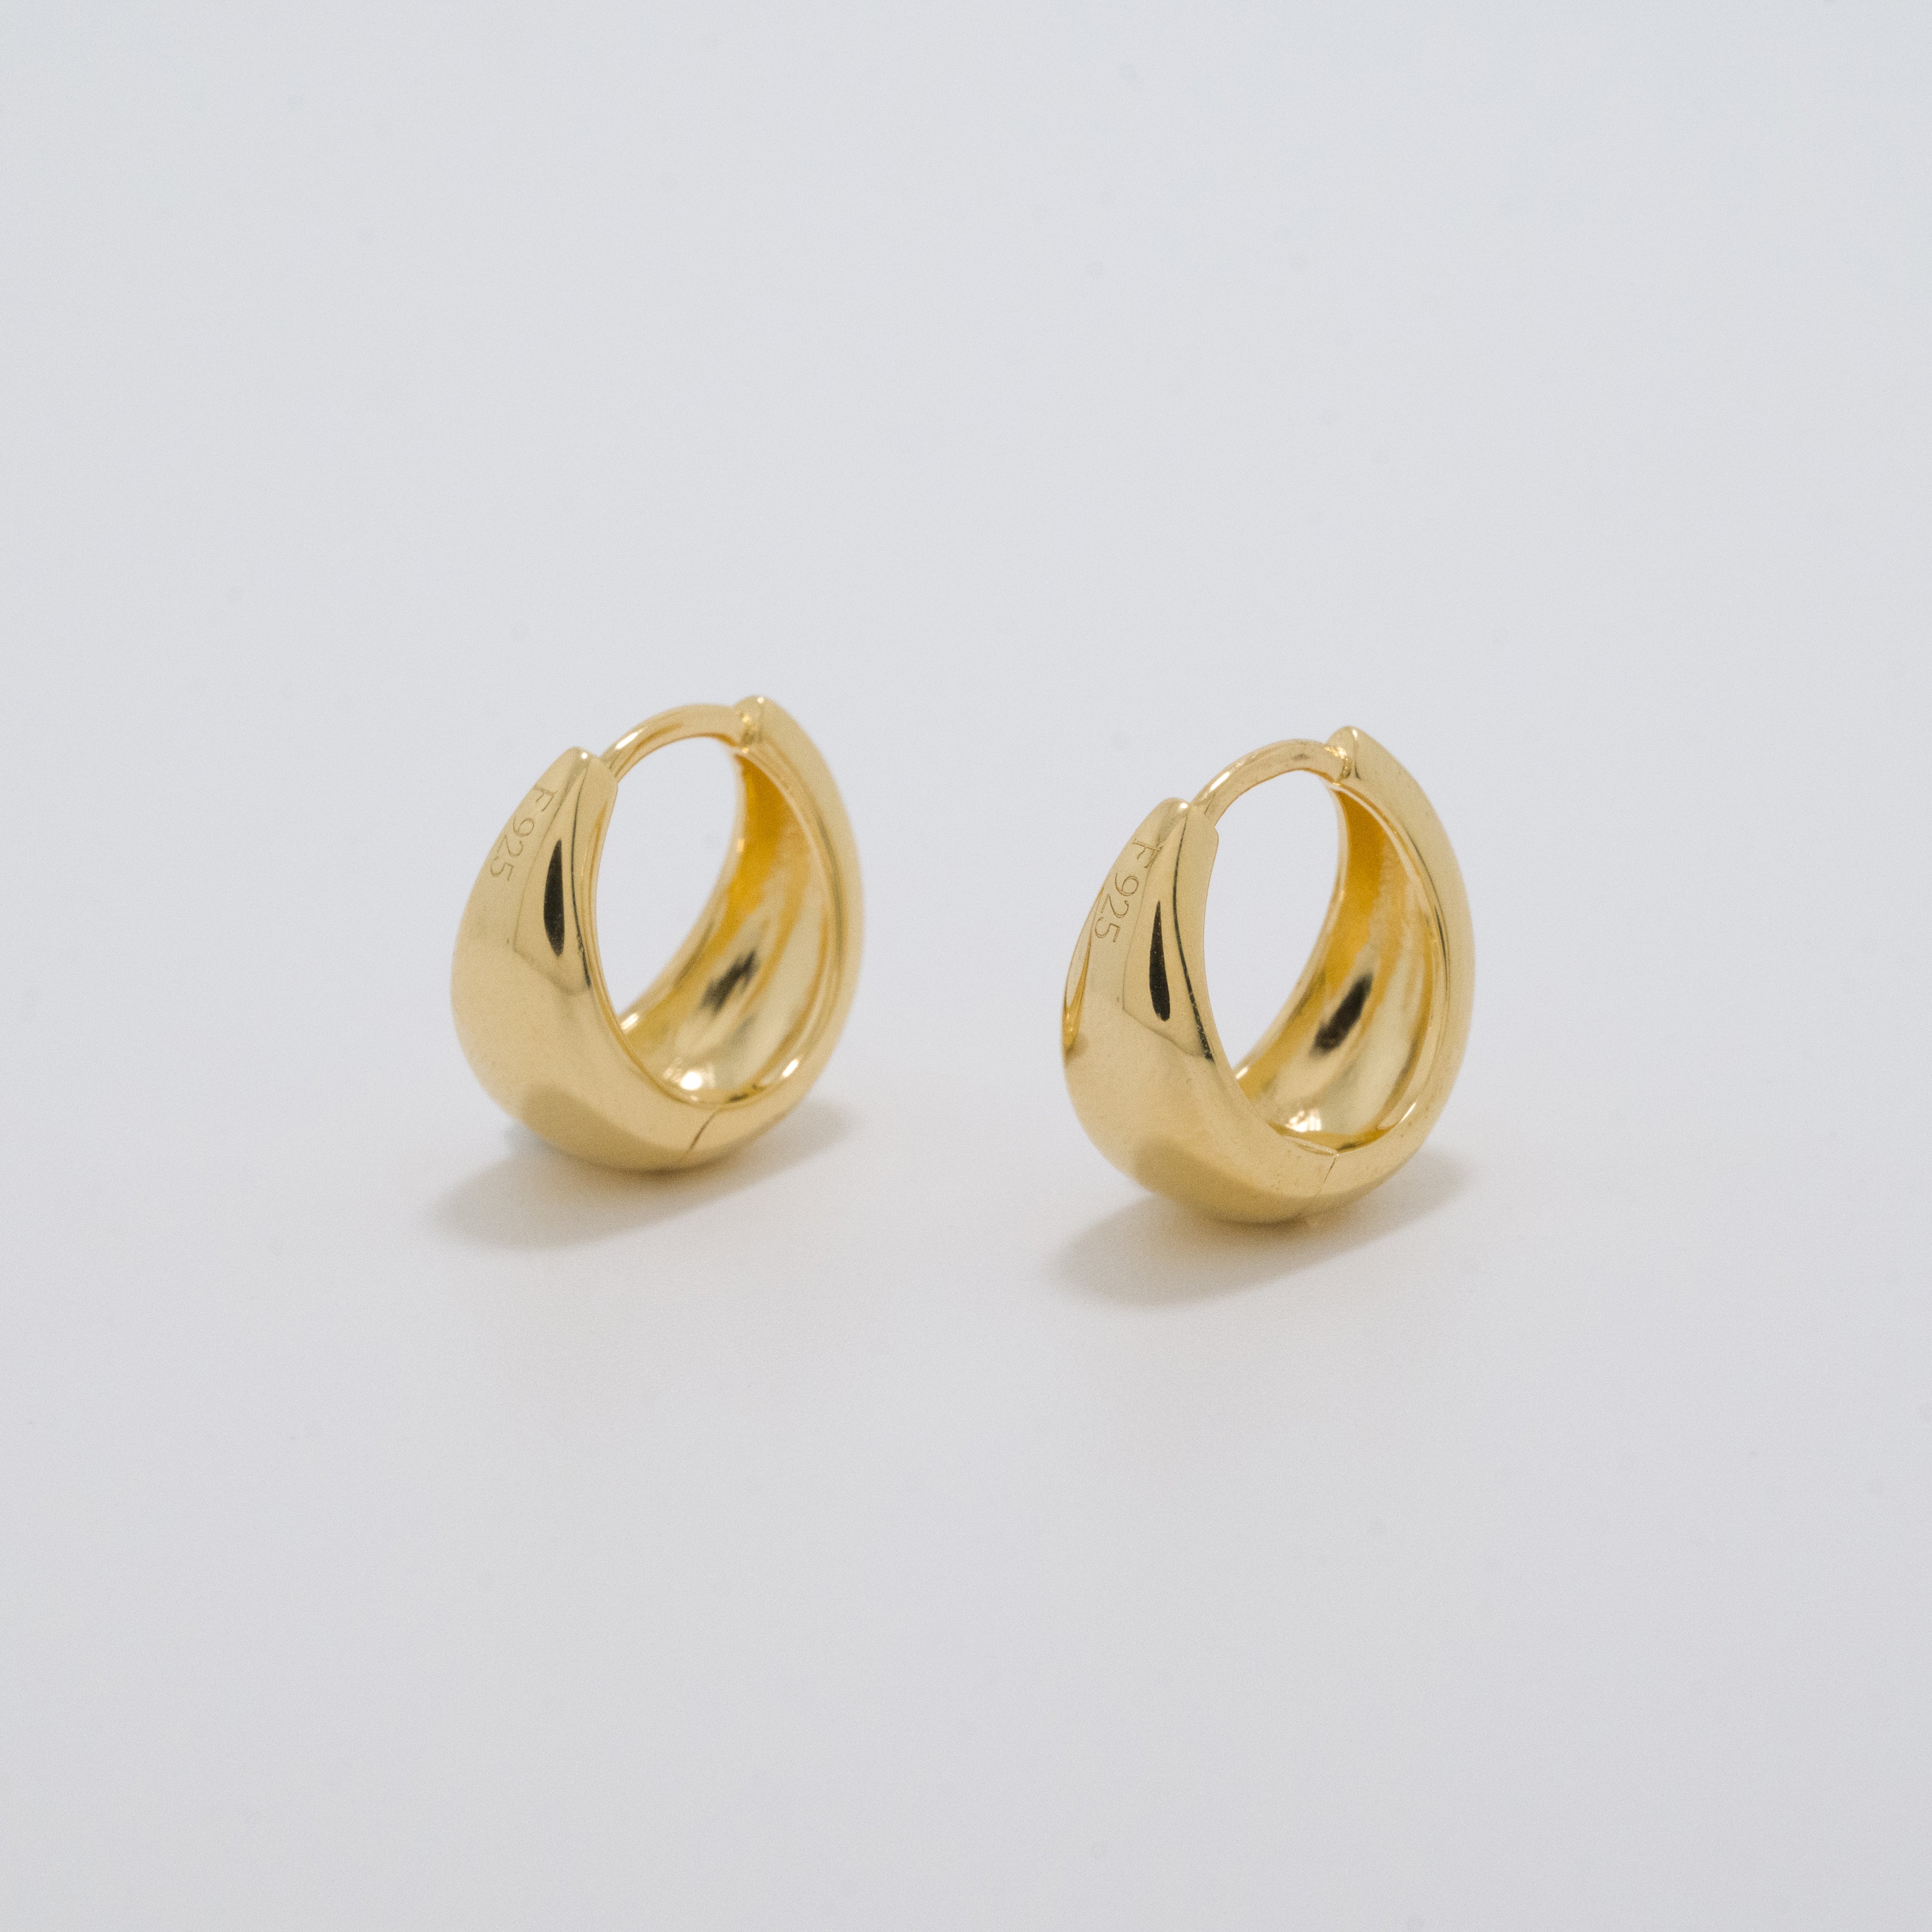 Gold hoop earrings - tacky or classy | Mumsnet